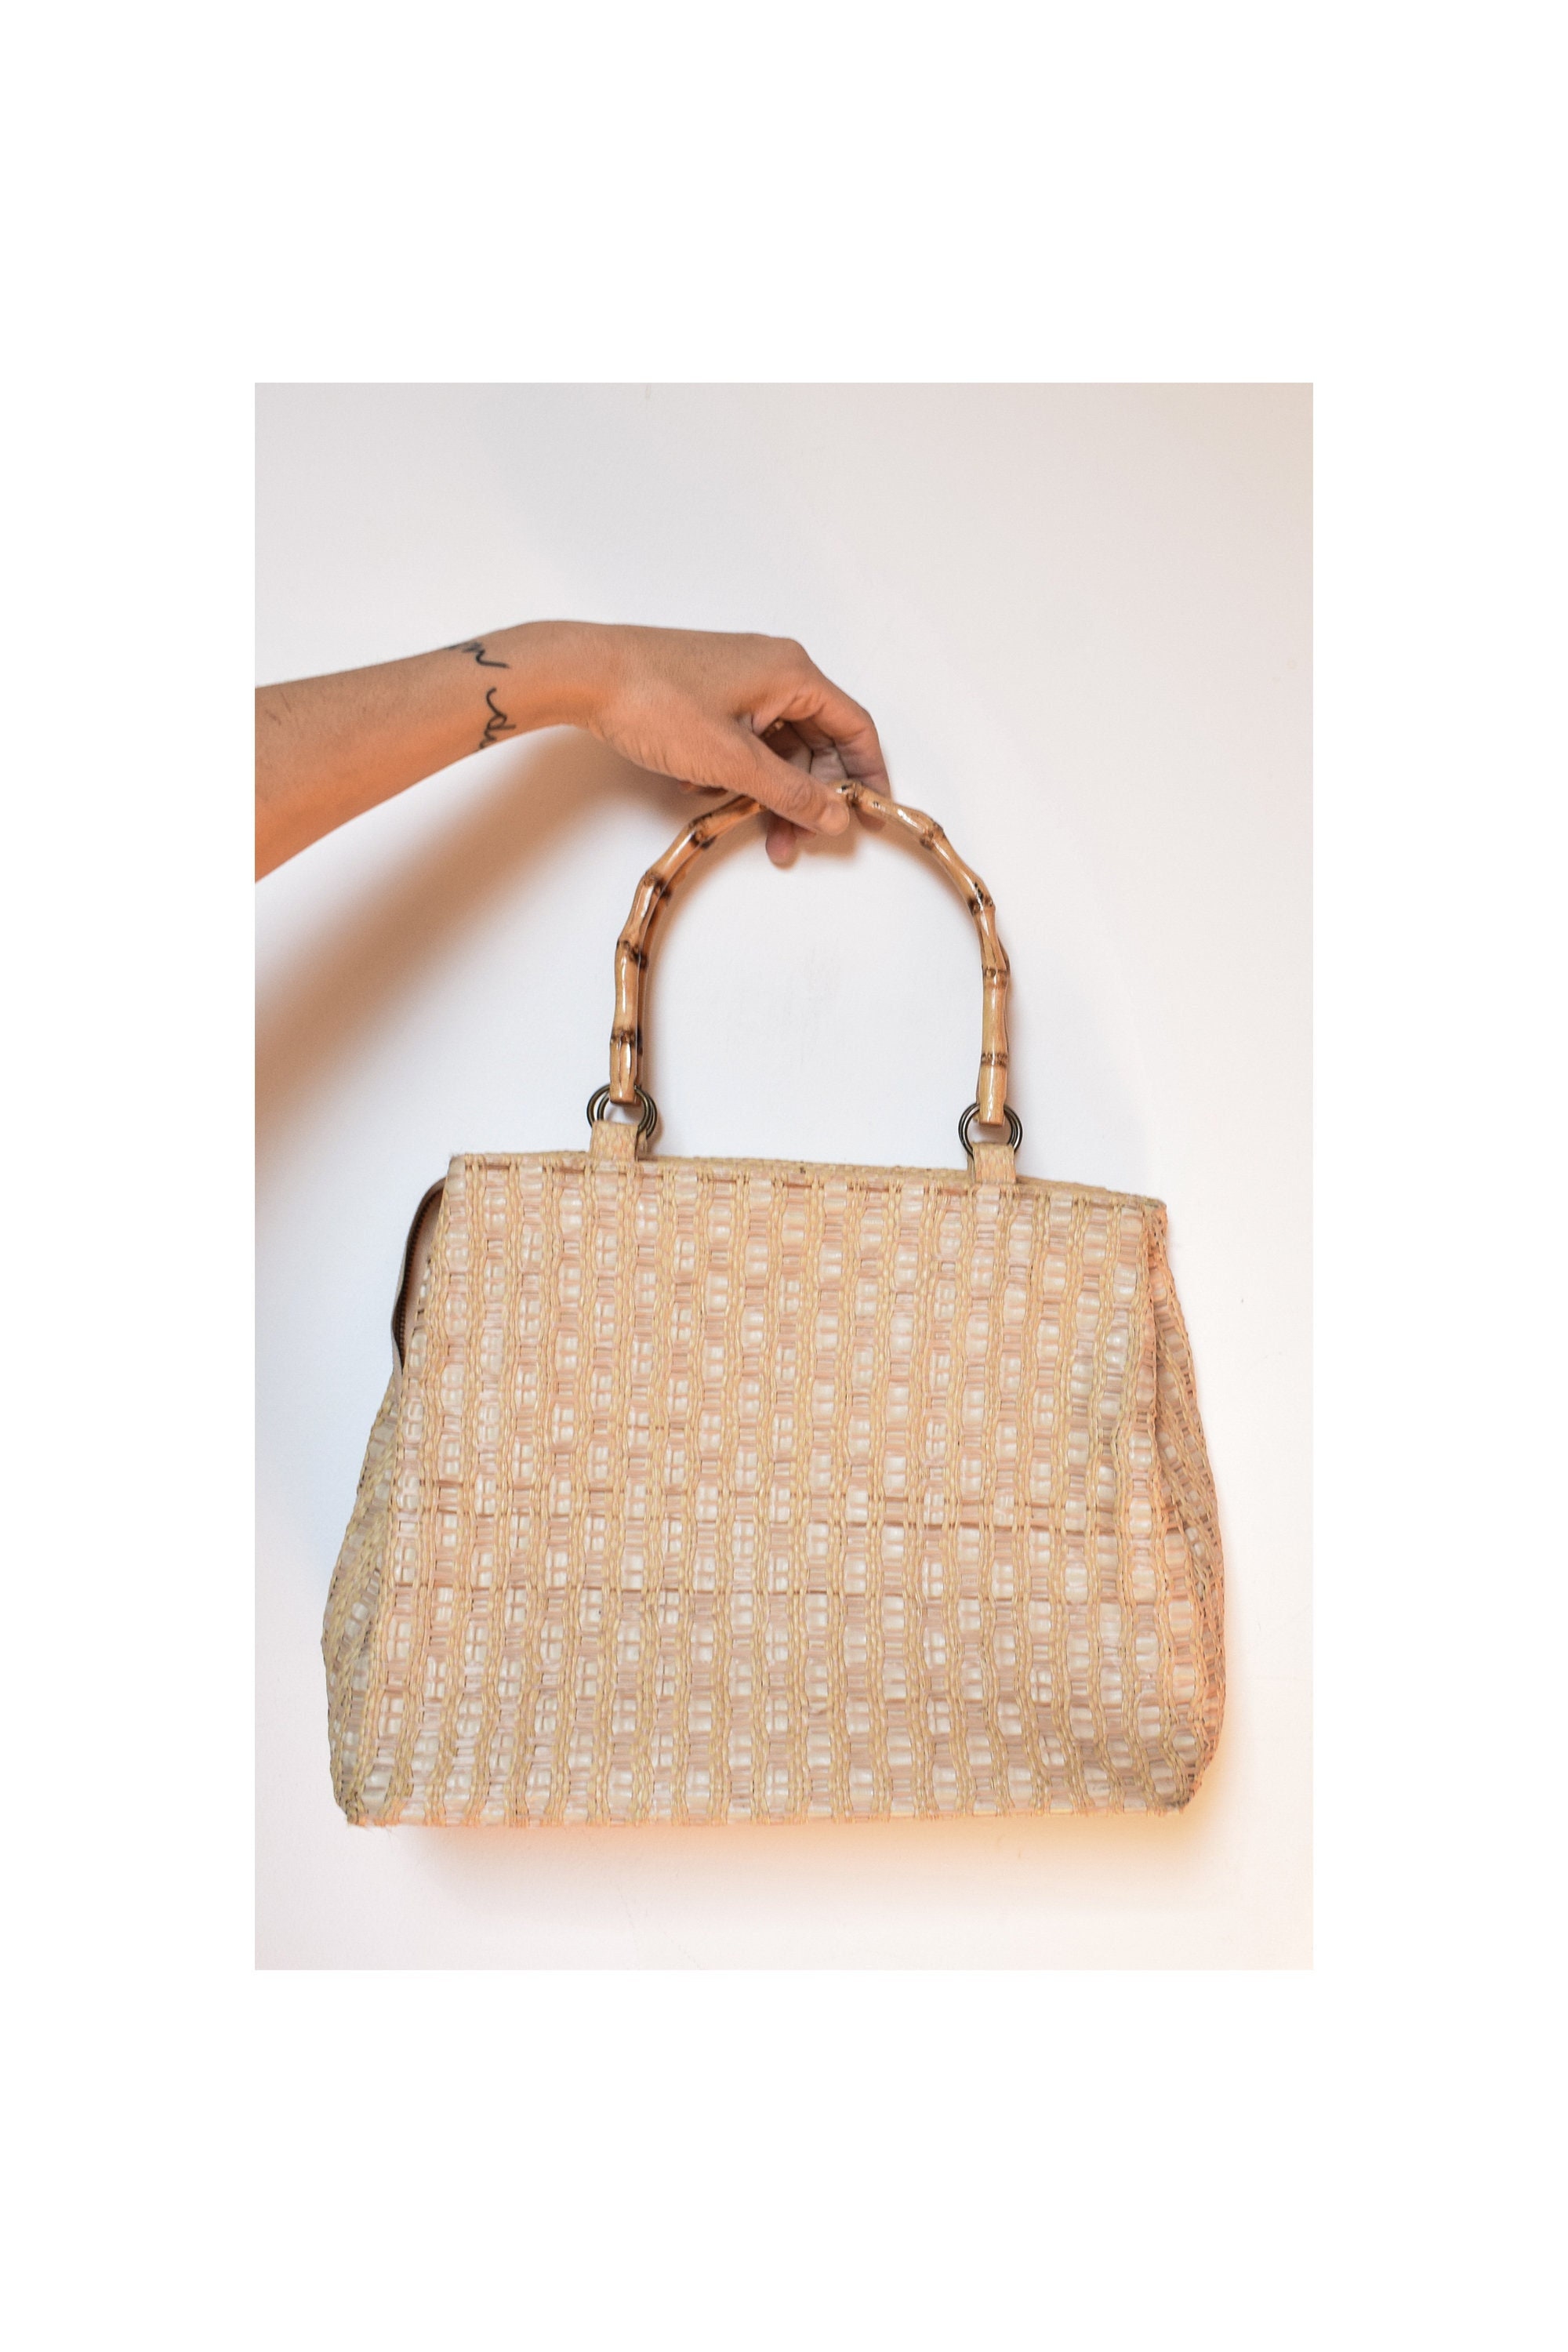 Dolce & Gabbana Crocheted Straw 'Miss Sicily' Top Handle Satchel Handbag, Dolce & Gabbana Handbags